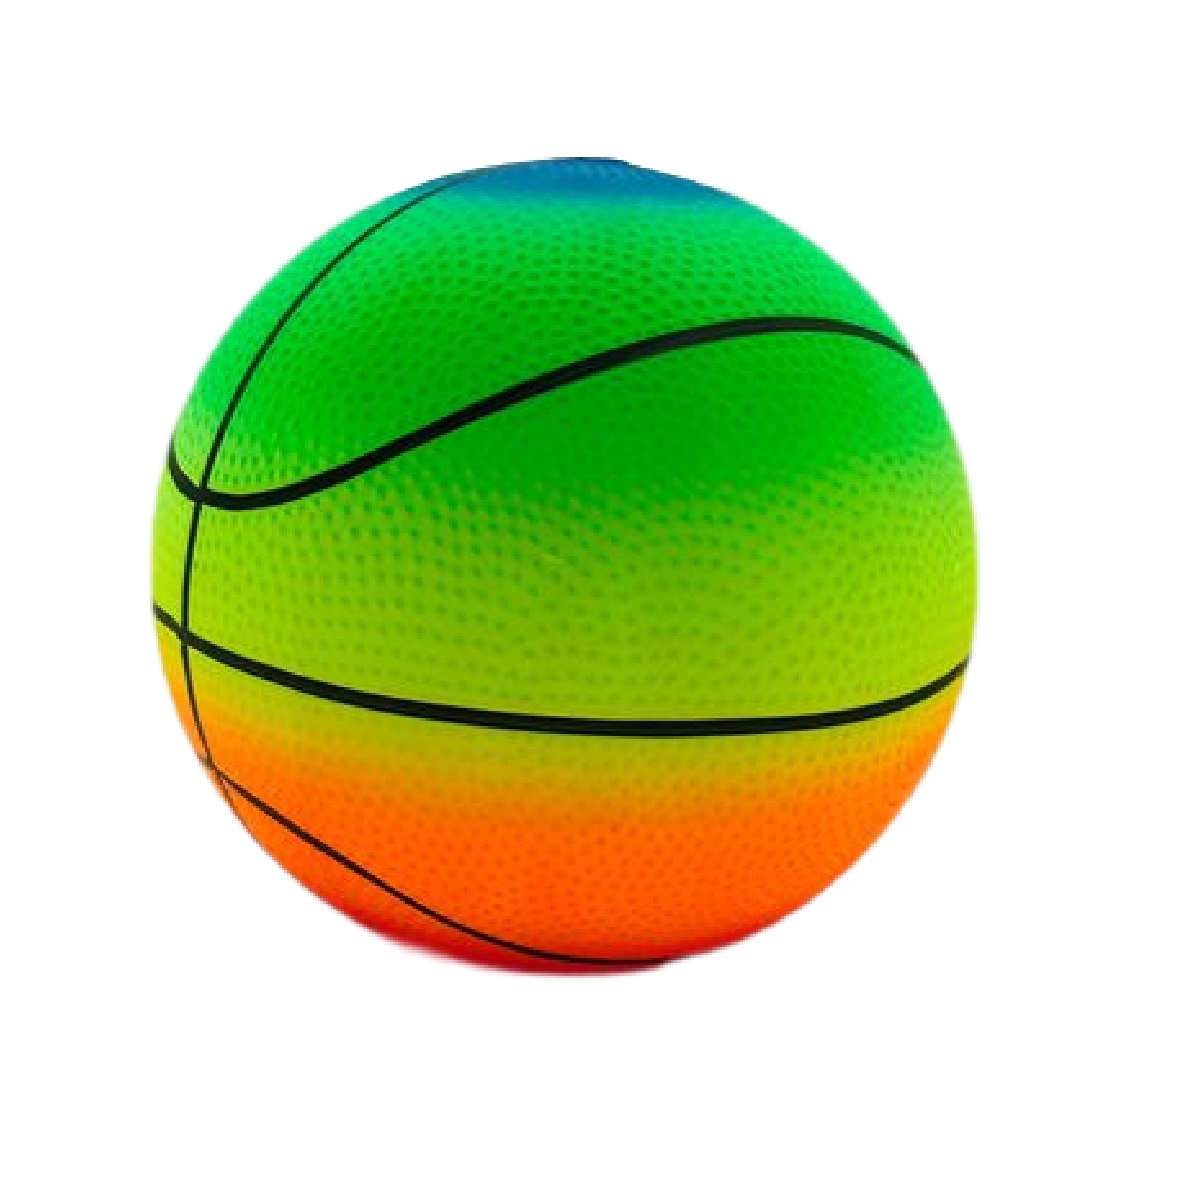 8.5" NEON RAINBOW BASKET/ FOOTBALL  DEFLATED QUALITY  BALL  180g 